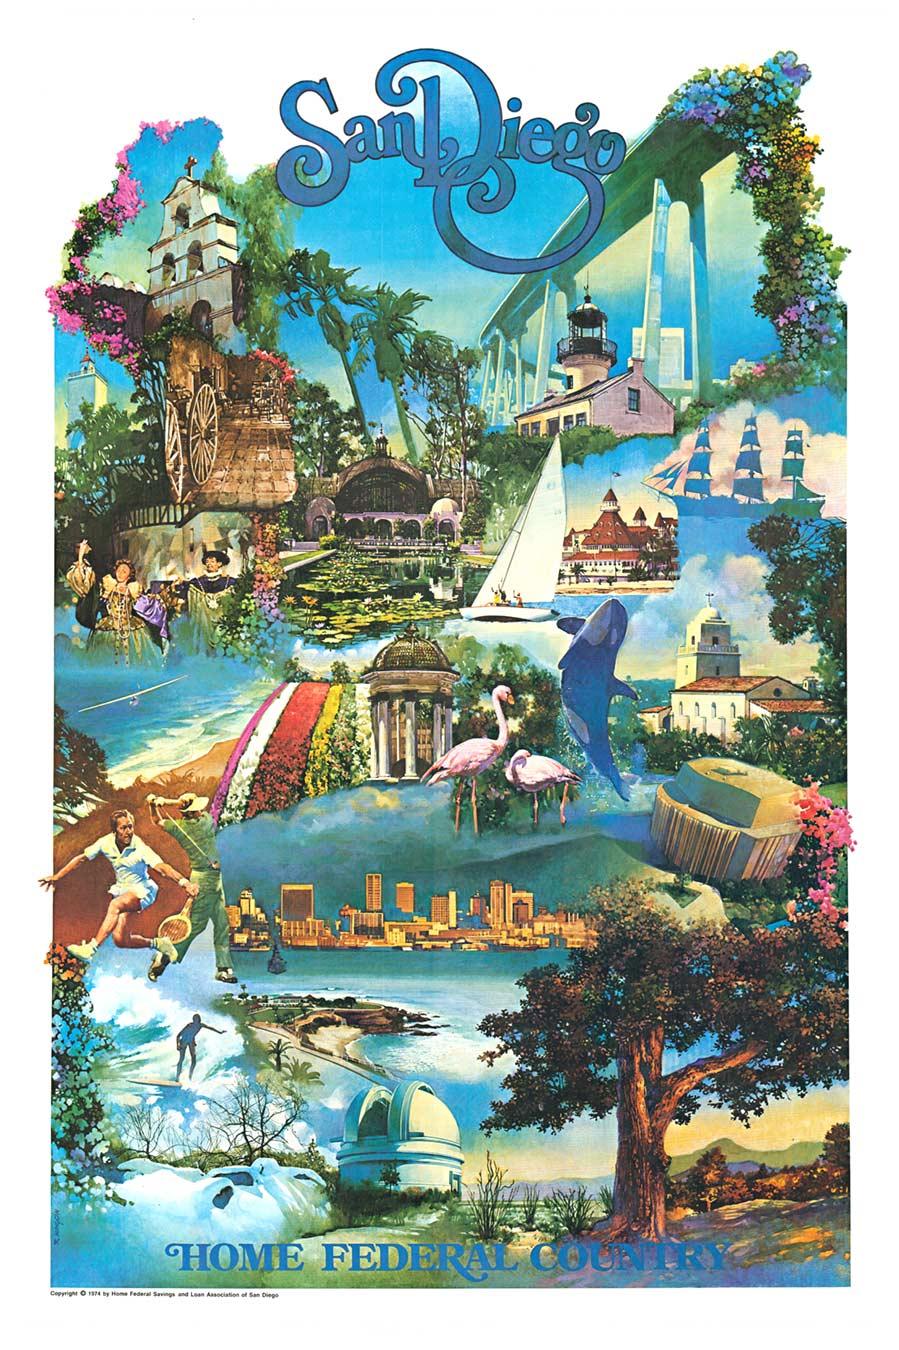 Robert Kinyon Animal Print - Original San Diego (Home Federal) 1974 vintage poster